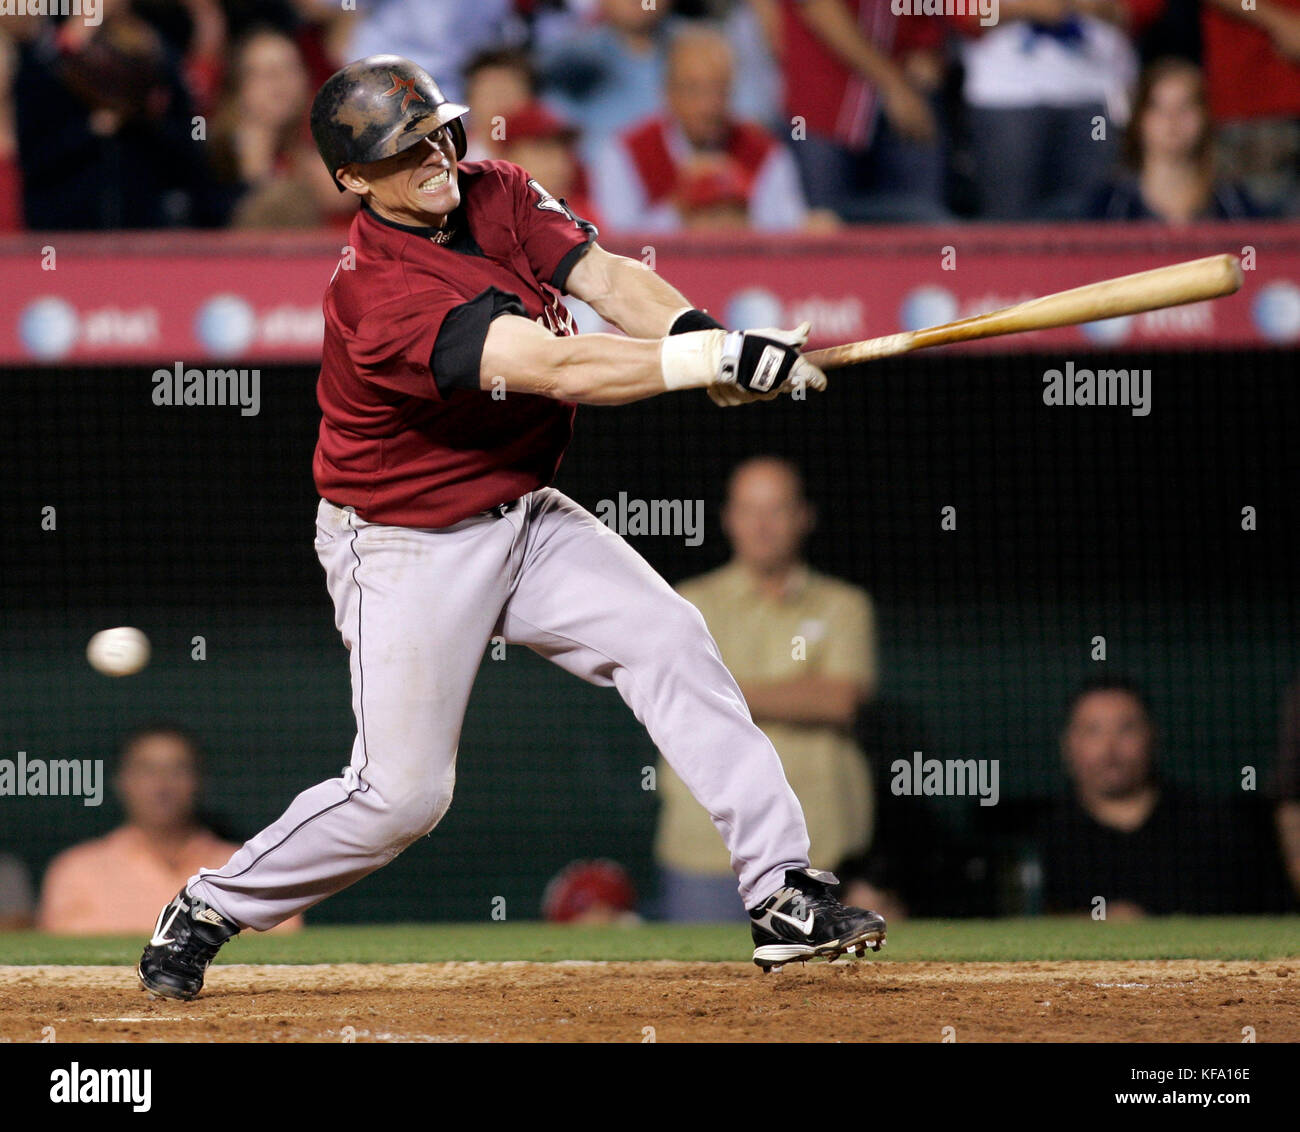 Craig Biggio Houston Astros Unsigned Follows Through on A Swing Photograph